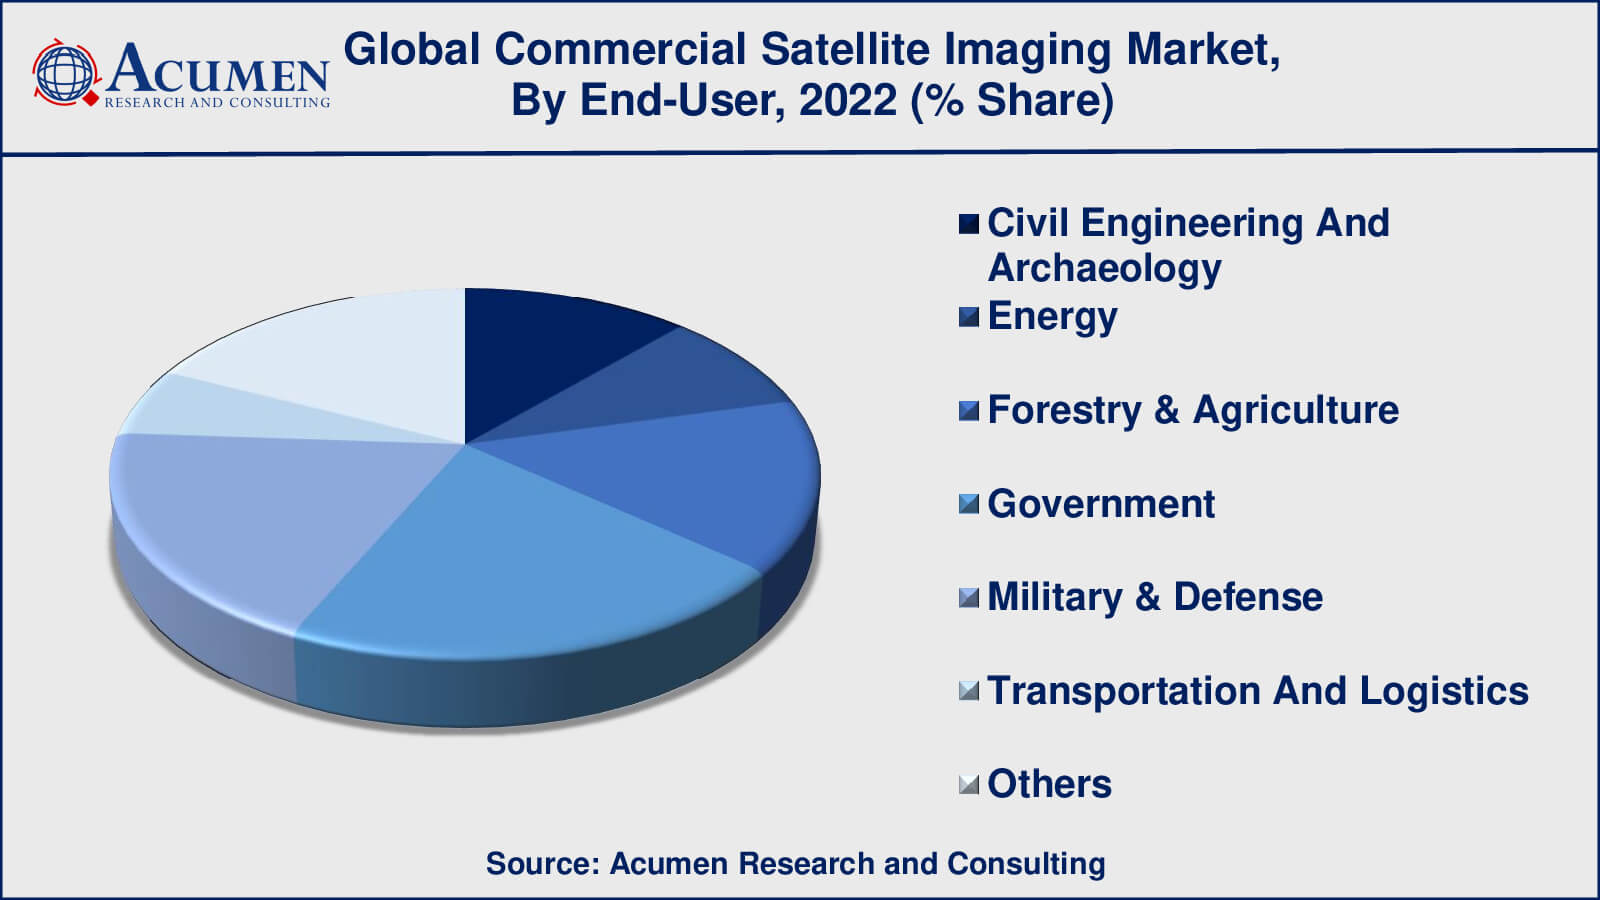 Commercial Satellite Imaging Market Drivers